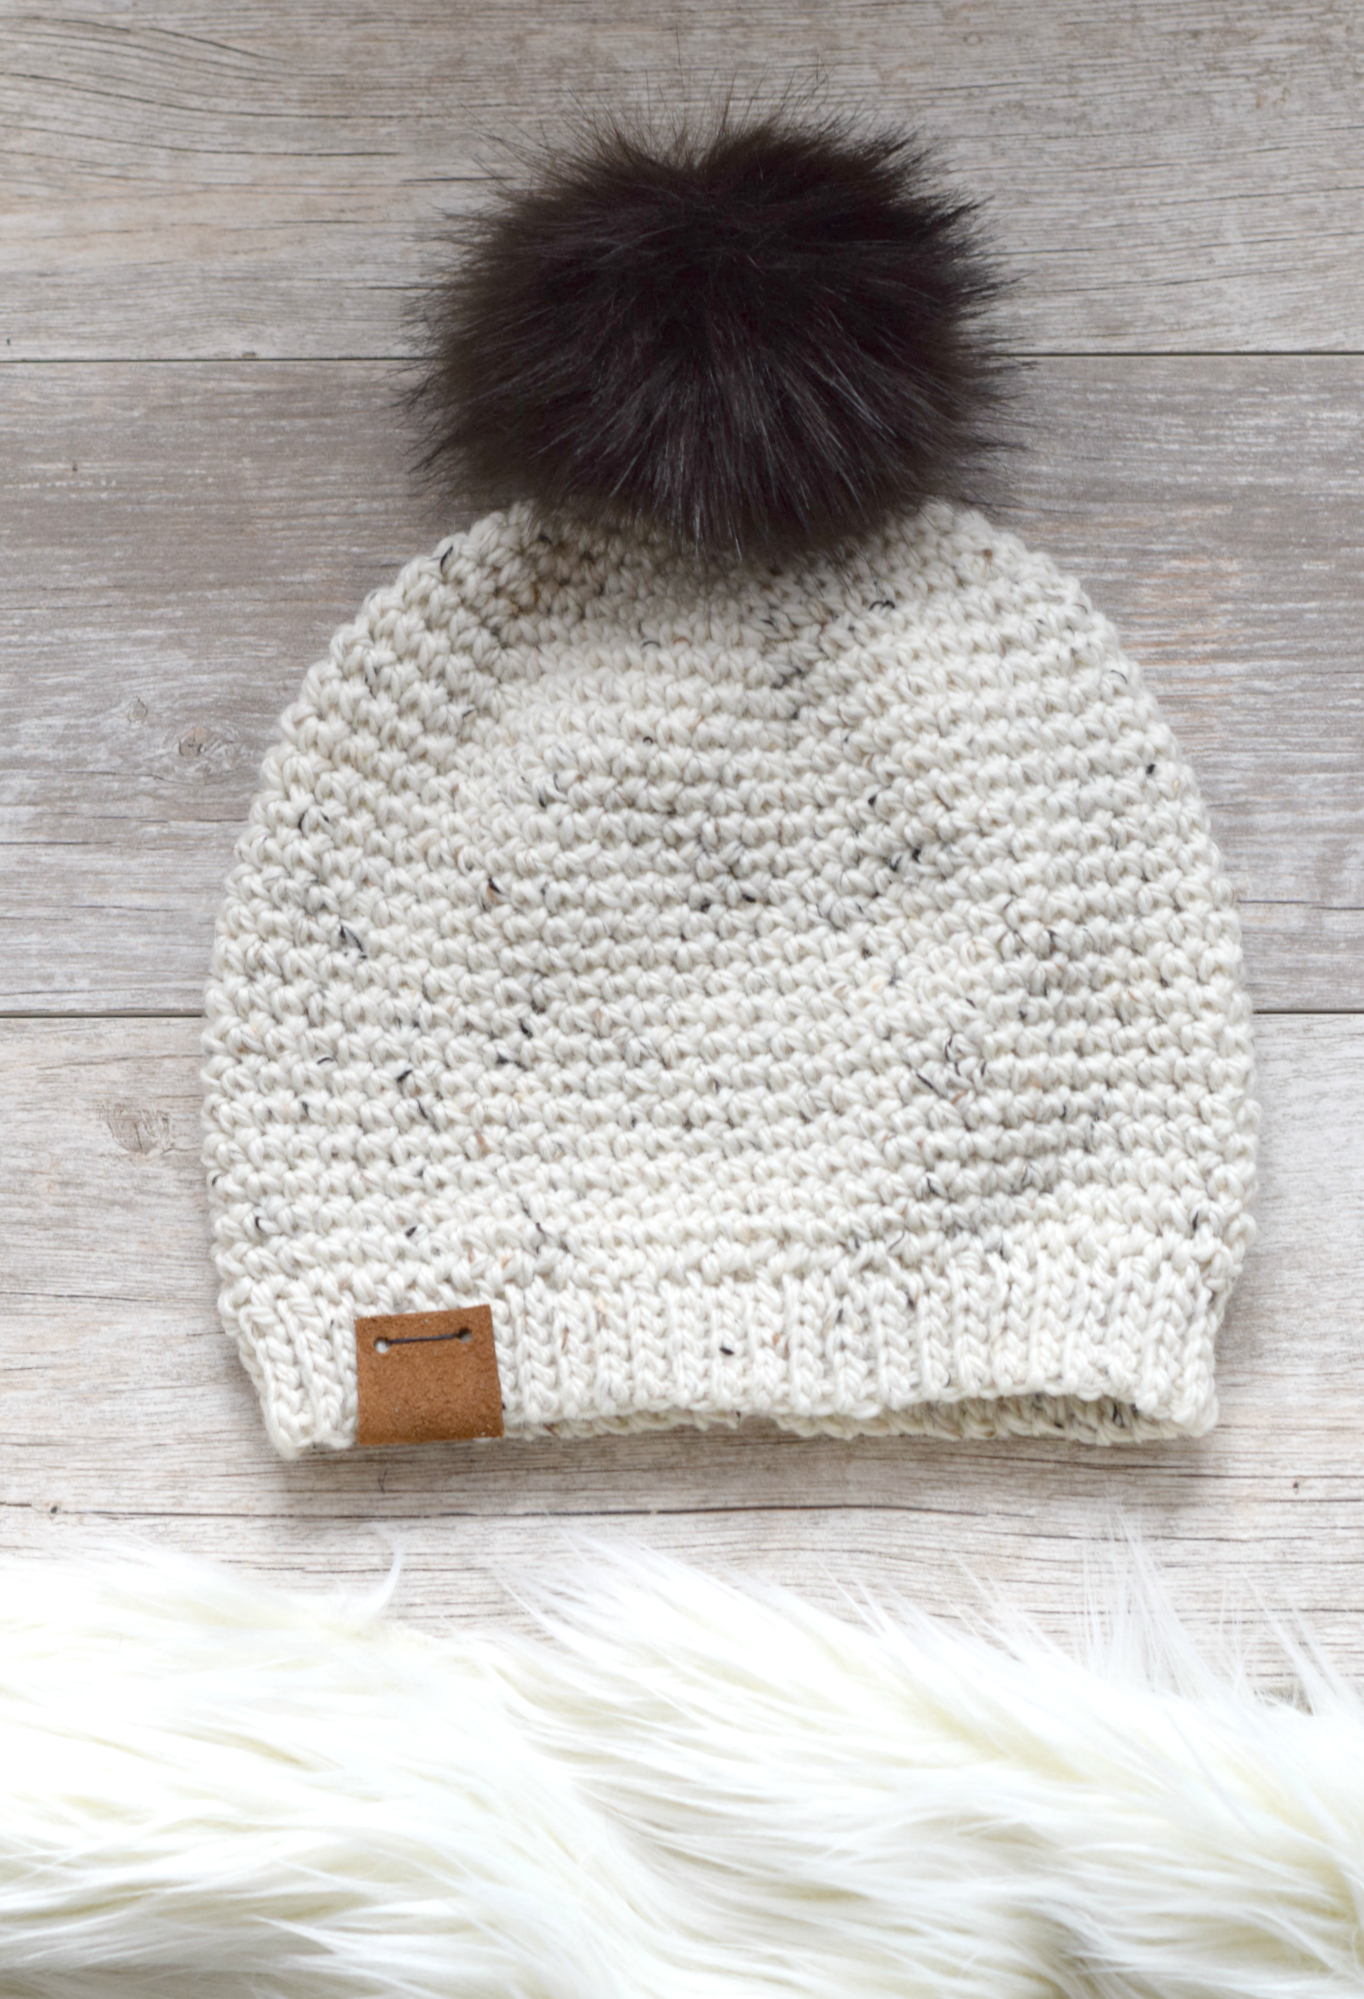 Tan and White Chunky Winter Hat Crochet Women/'s Grey